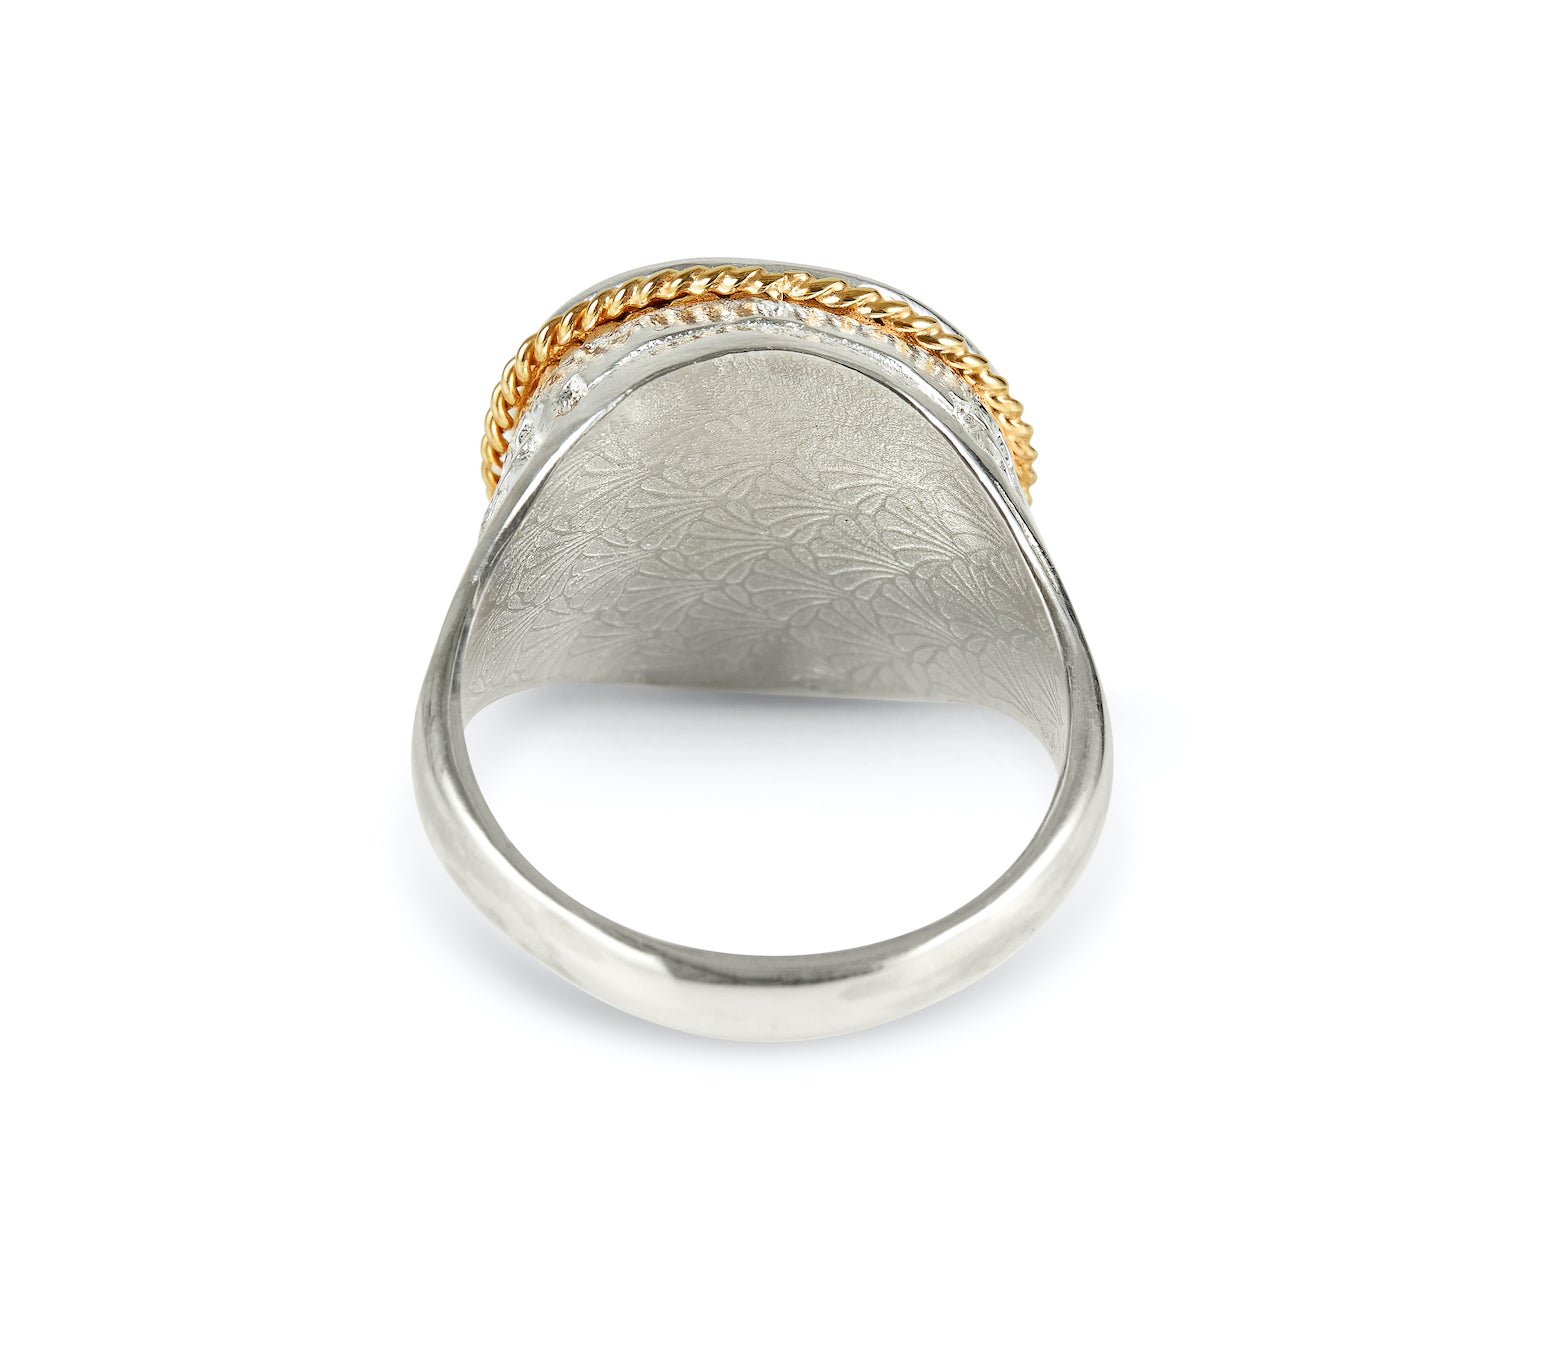 Gold Mini Moon Signet Ring with Diamonds